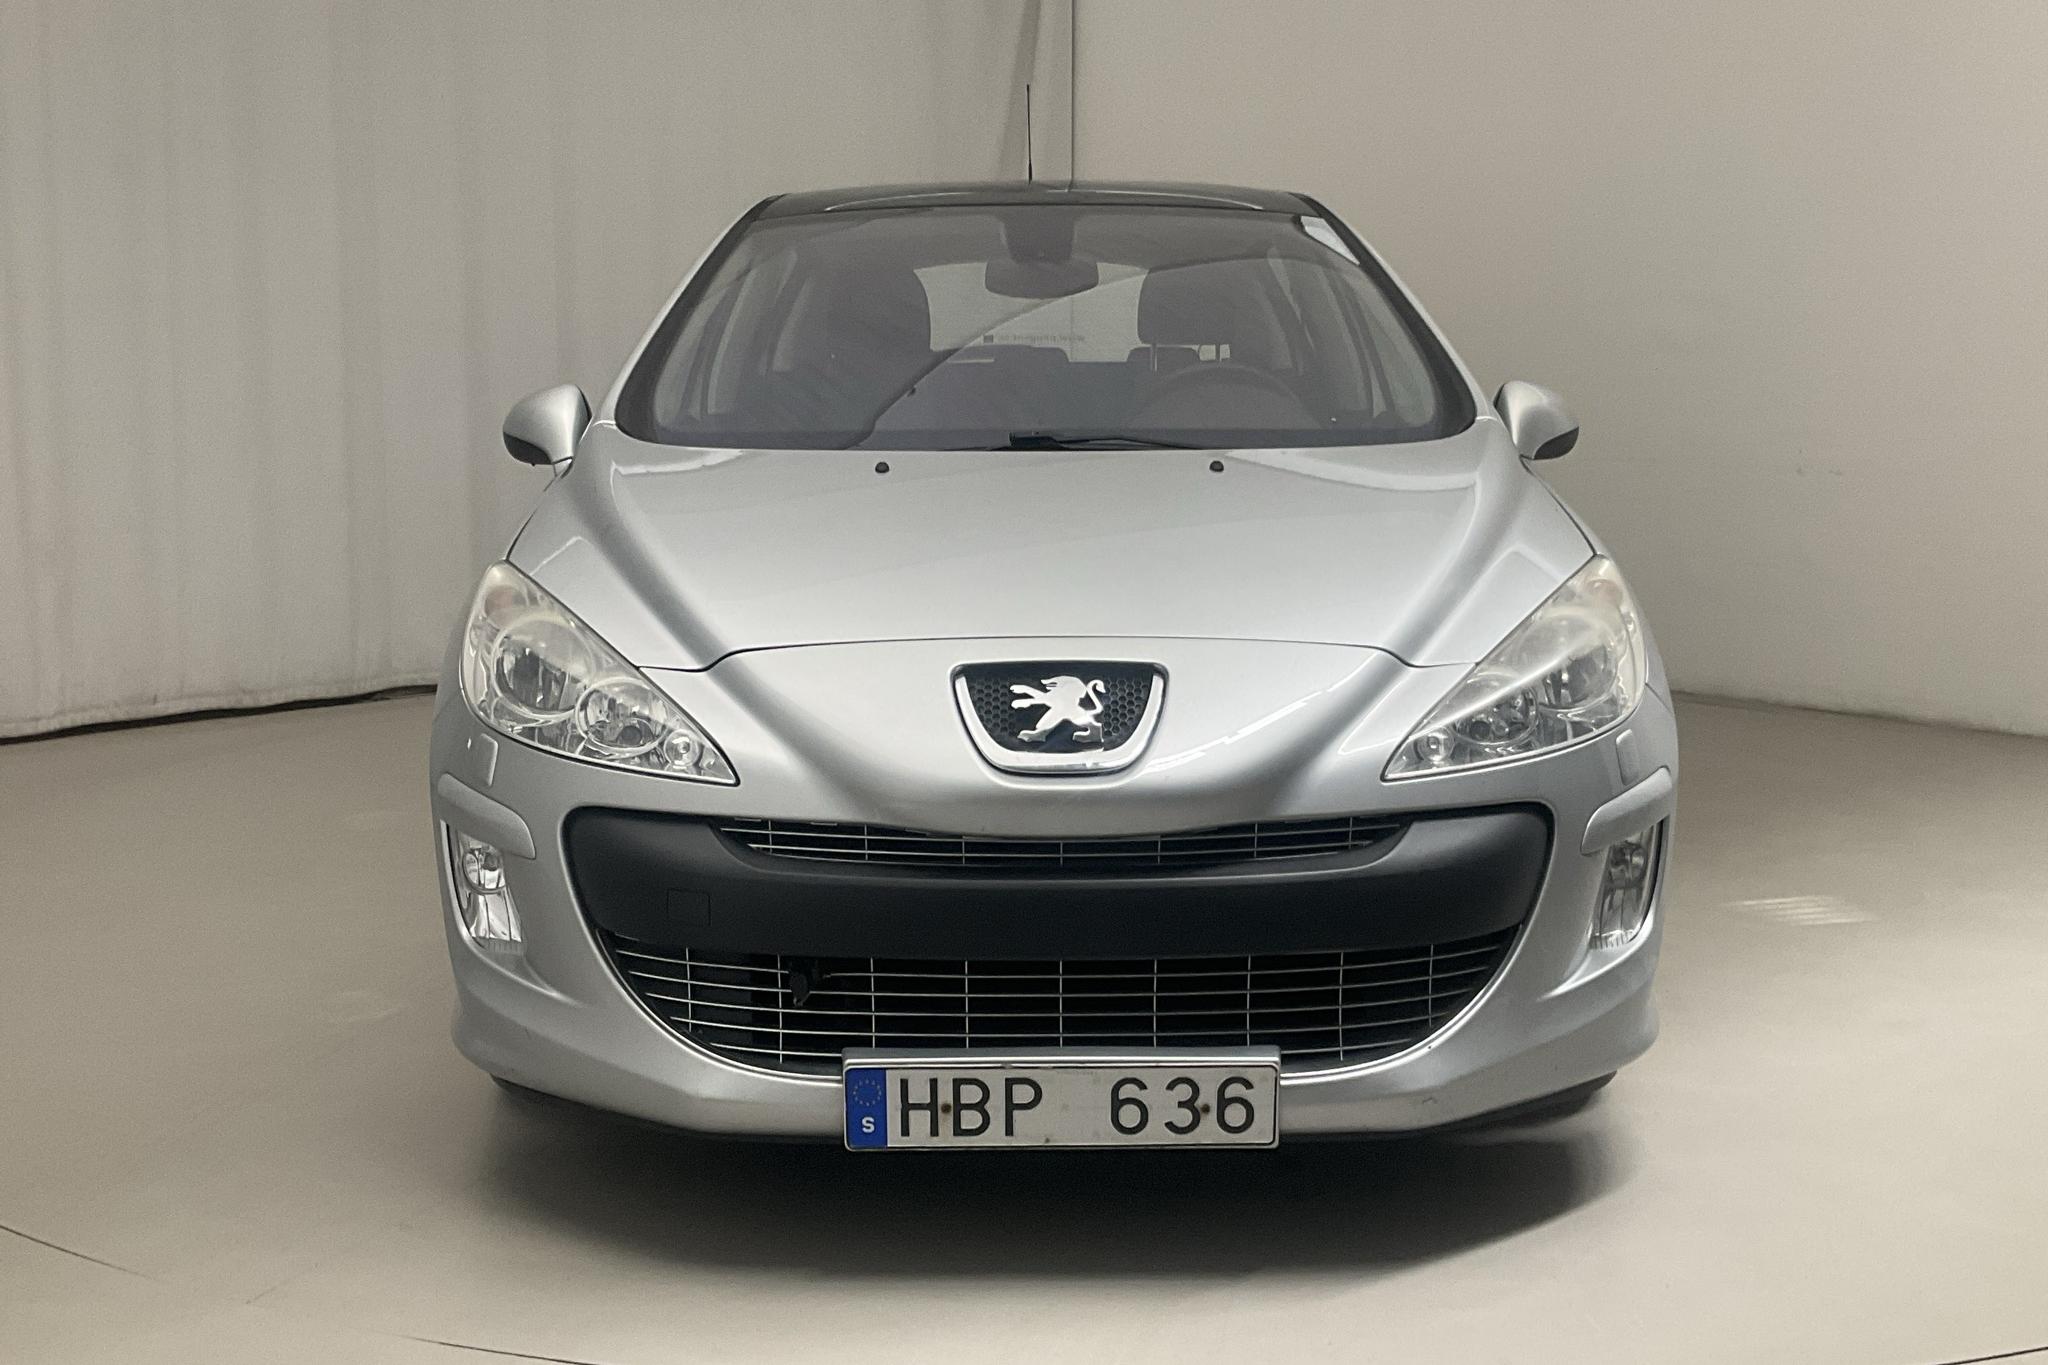 Peugeot 308 1.6 HDi FAP 5dr (110hk) - 91 260 km - Automatic - Light Grey - 2008